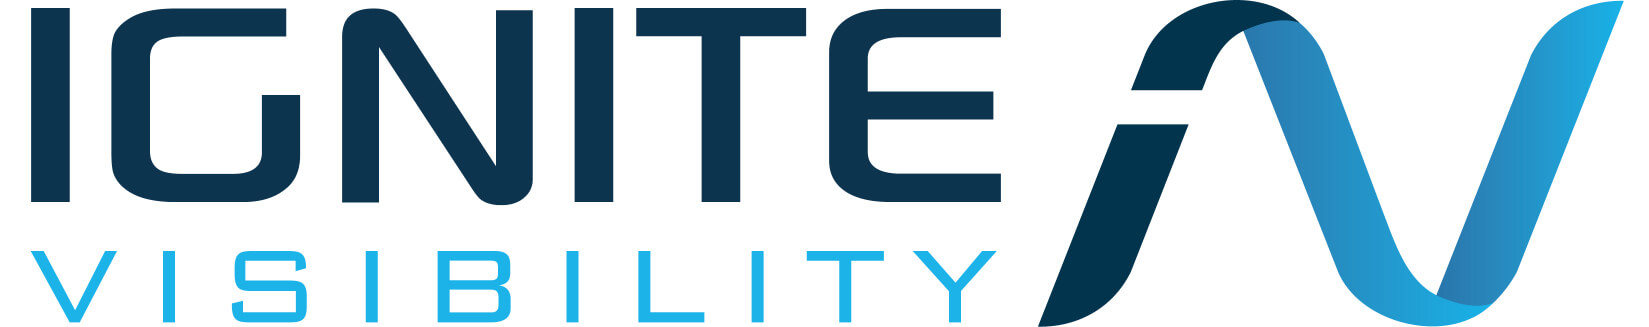 Top Global SEO Agency Logo: Ignite Visibility